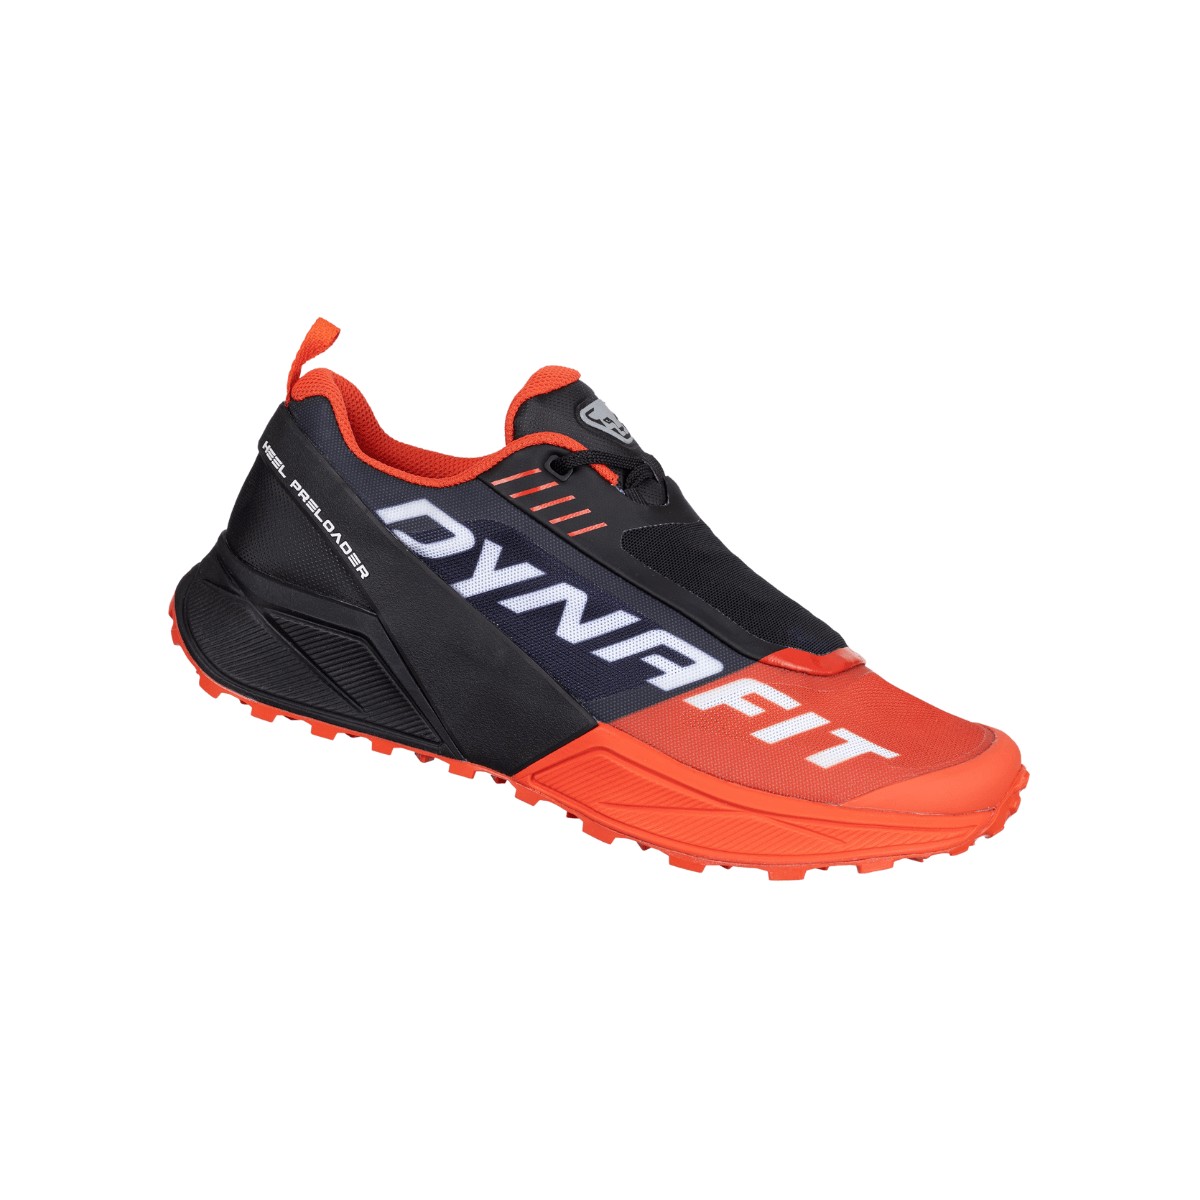 Schuhe Dynafit Ultra 100 Schwarz-Orange AW22, Größe 44,5 - EUR